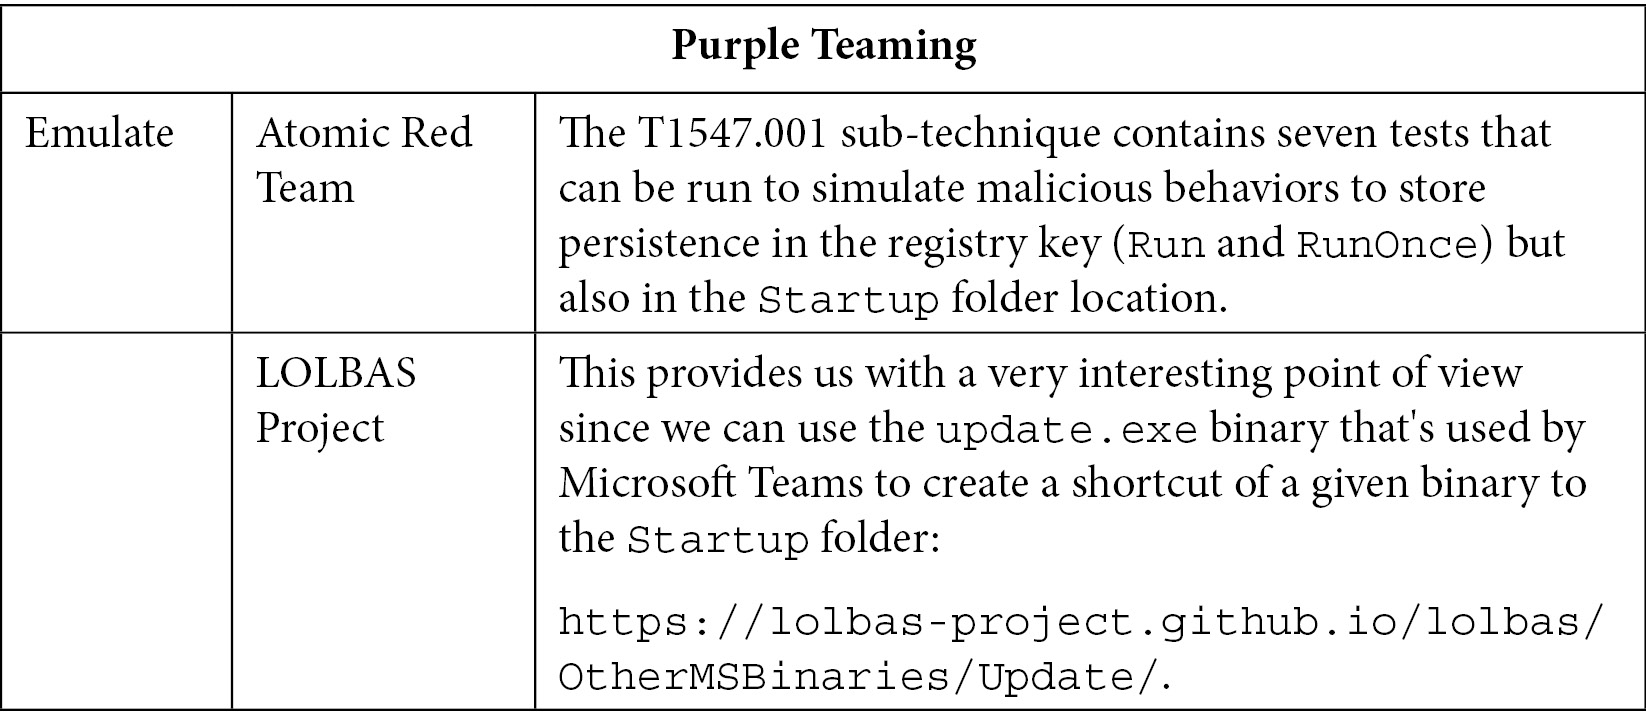 Table 10.6 – Purple Teaming T1547
